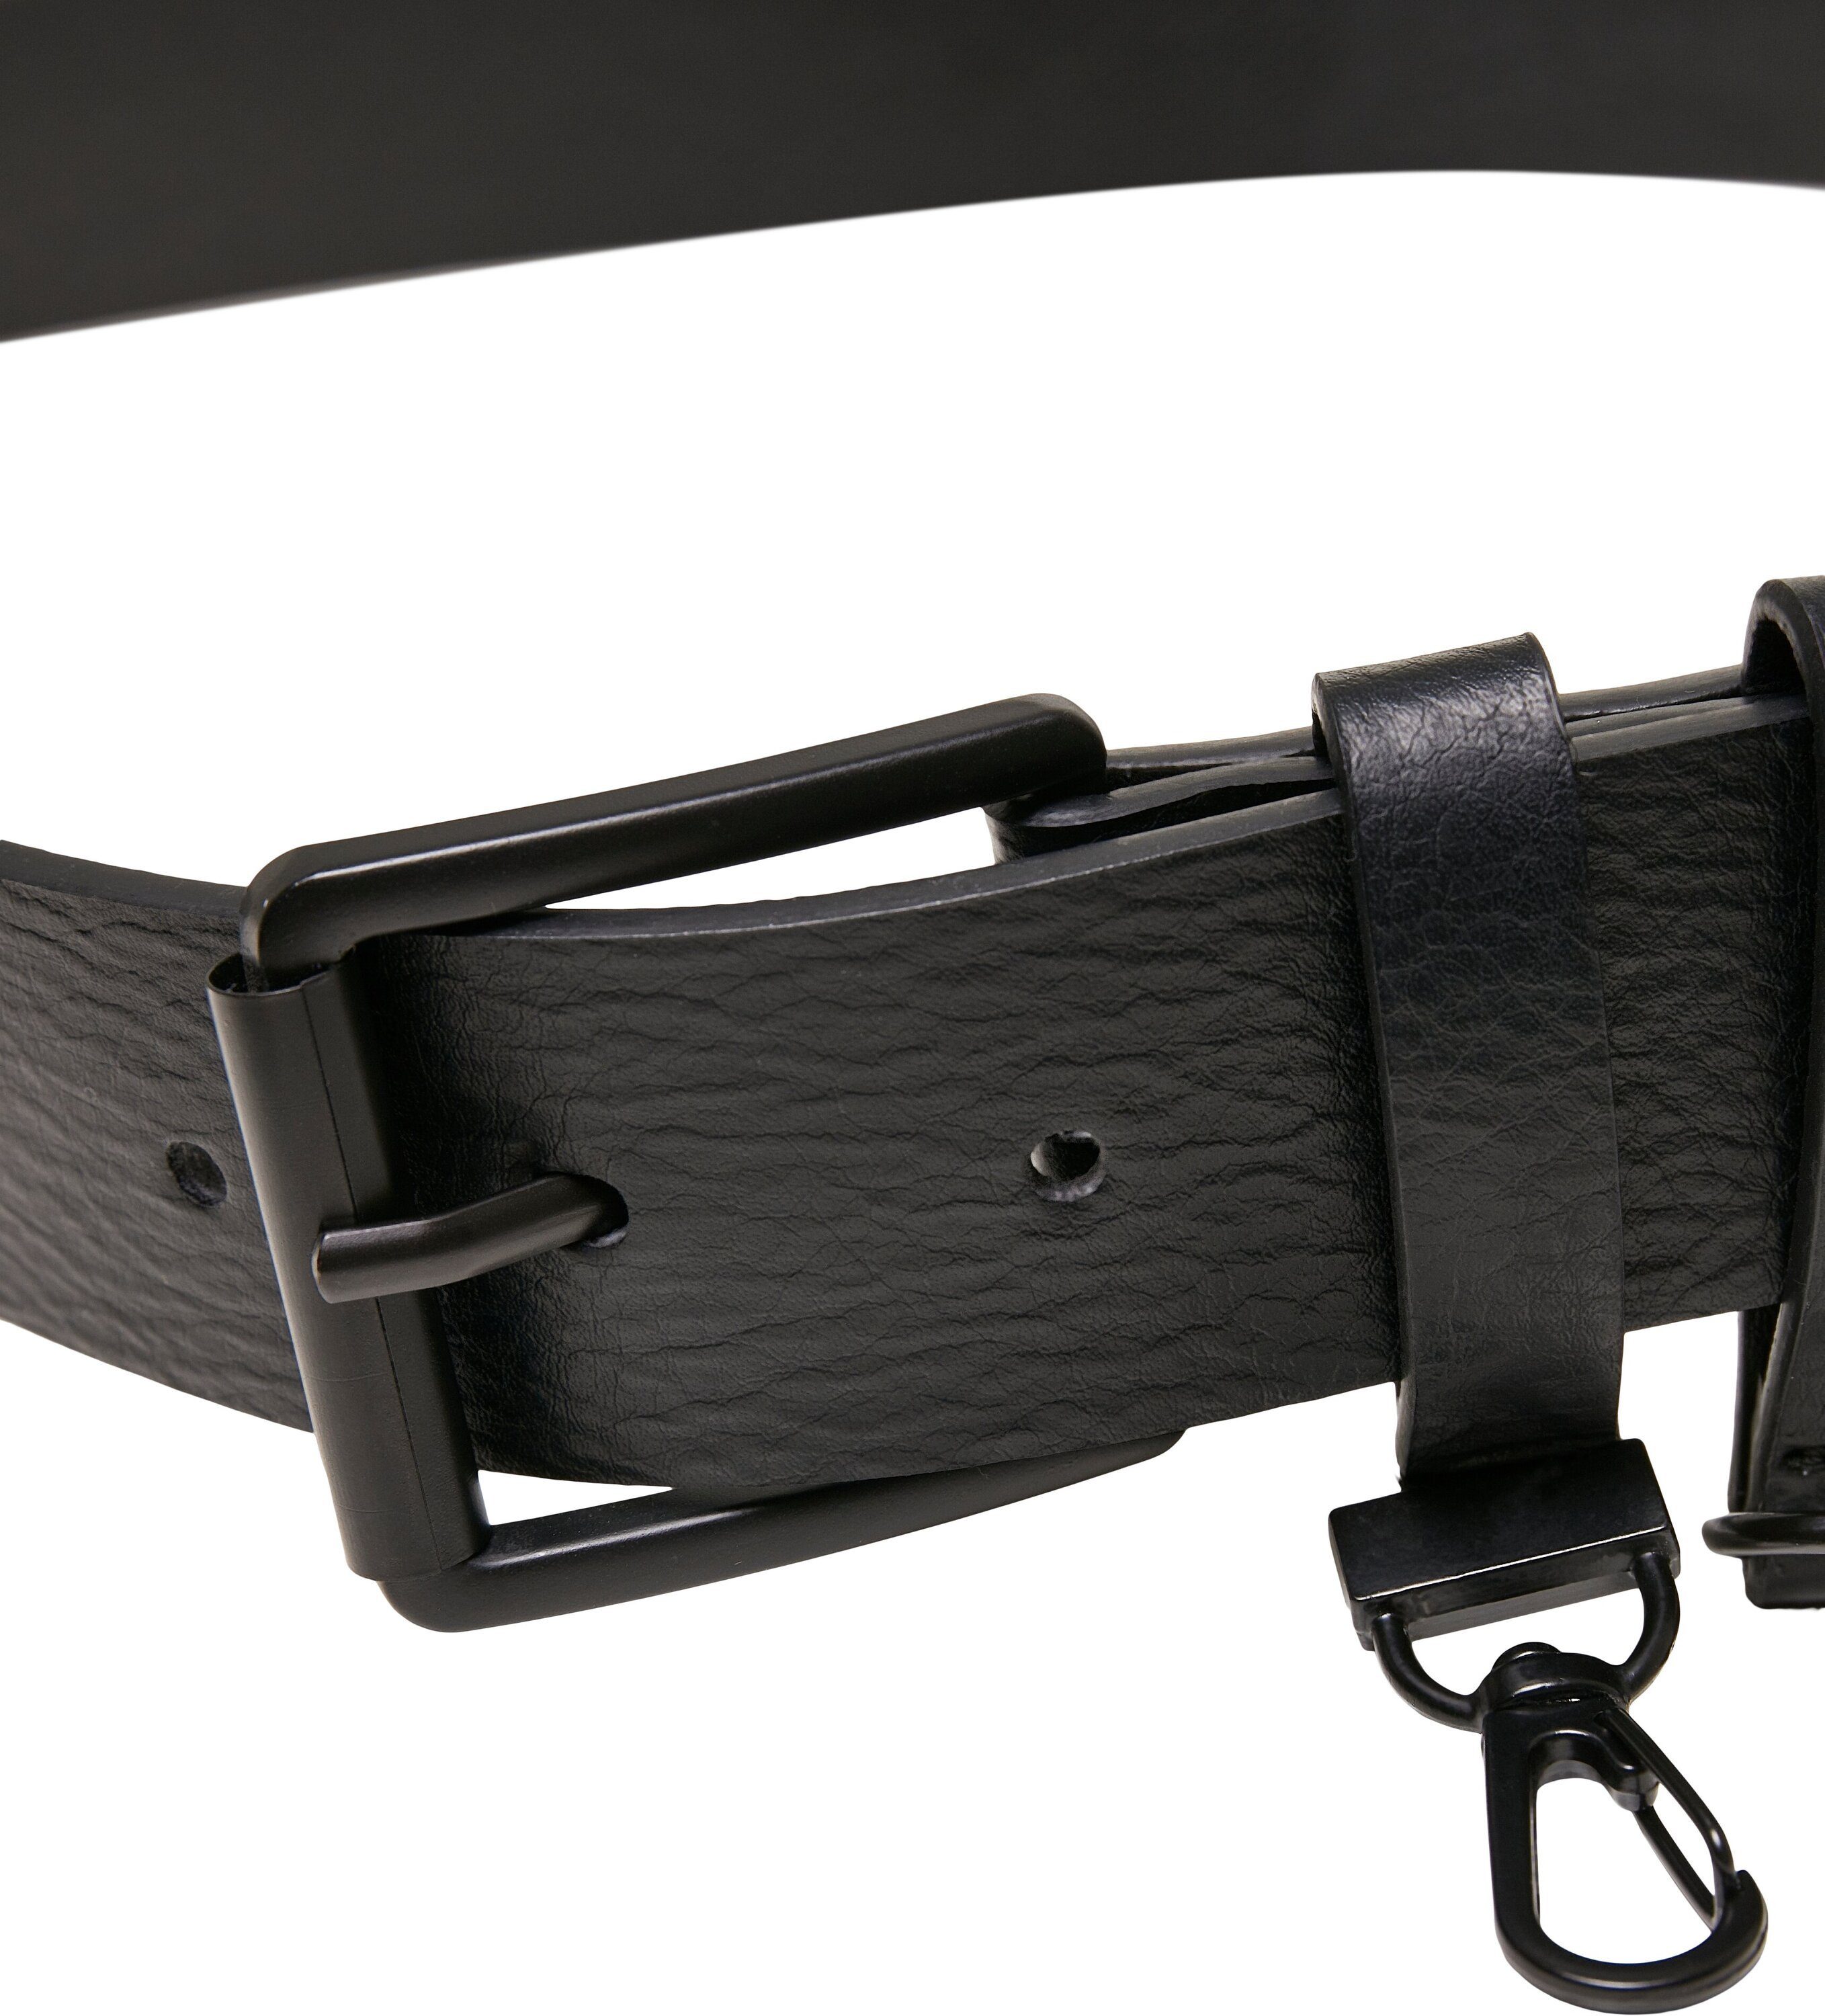 Leather CLASSICS Imitation URBAN With Chain Key Hüftgürtel Accessories Belt